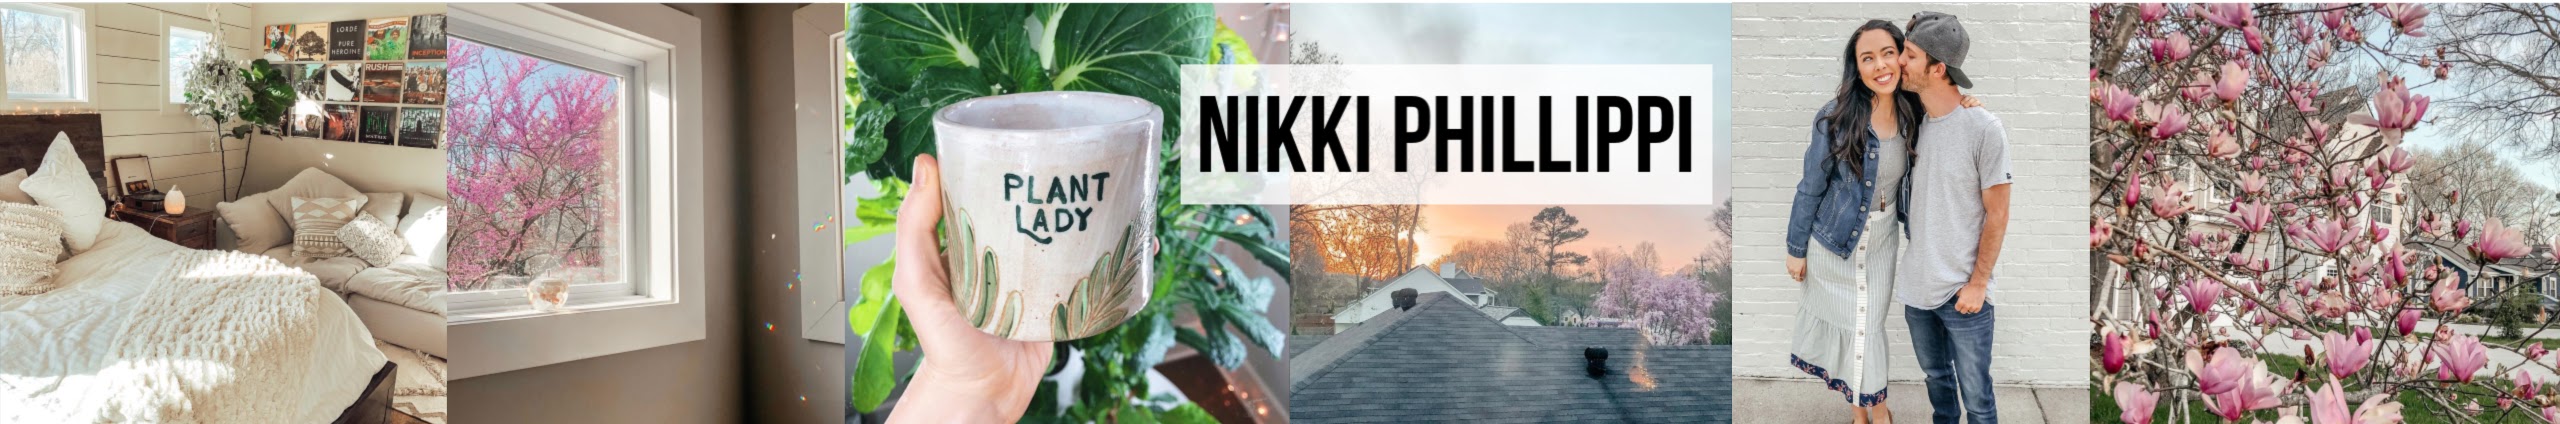 NikkiPhillippi-Banner